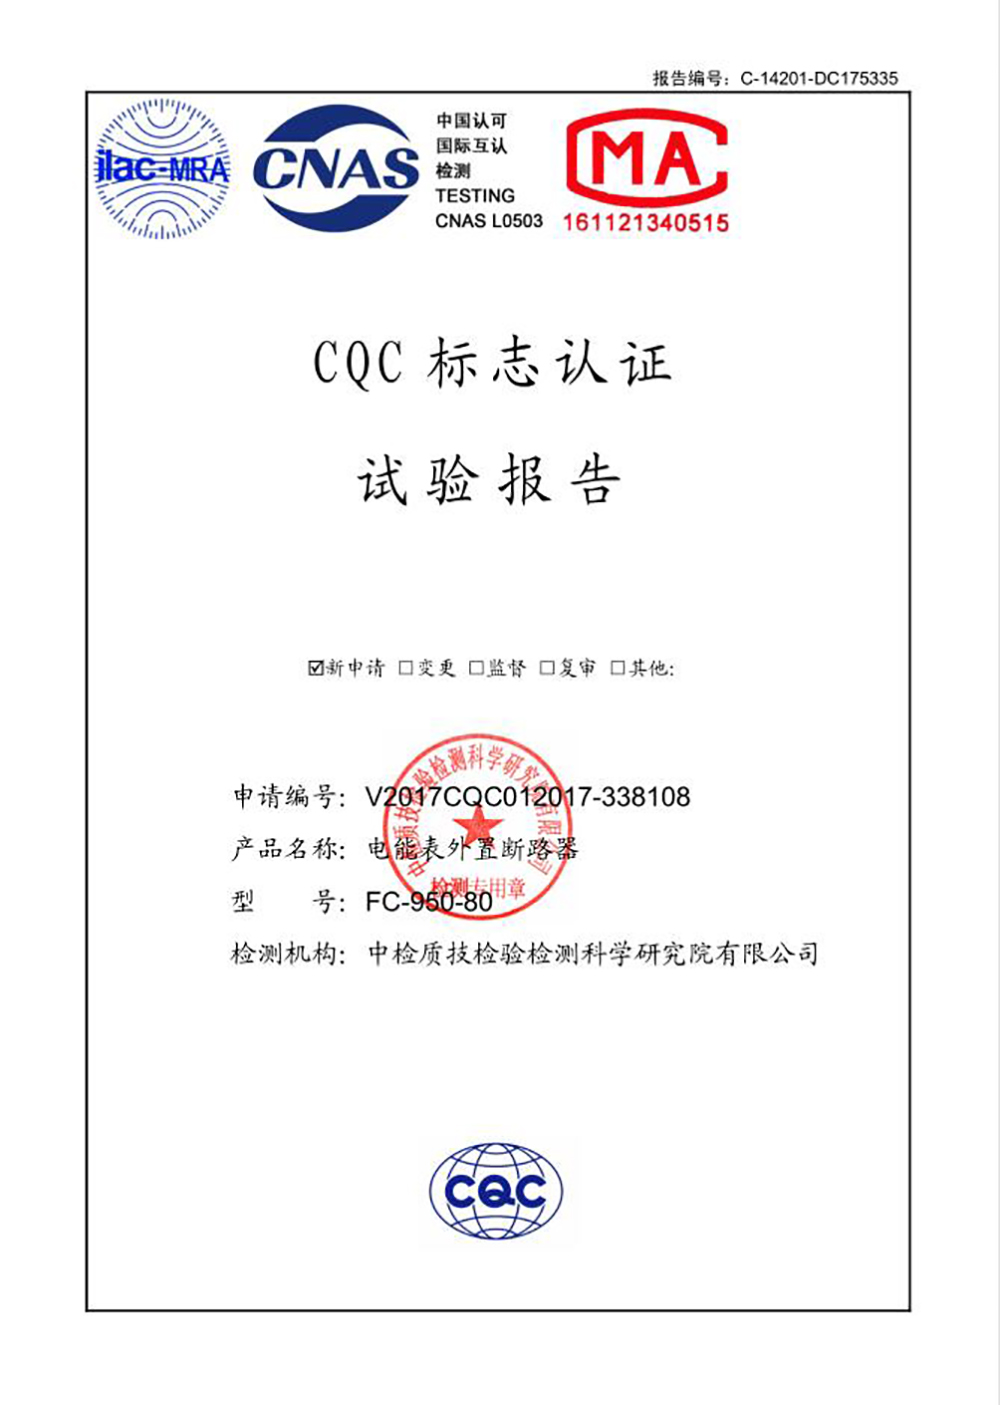 Cqc自愿认证 Ccc认证 高压产品试验 抗震支吊架委托试验 浙江成泰认证咨询有限公司